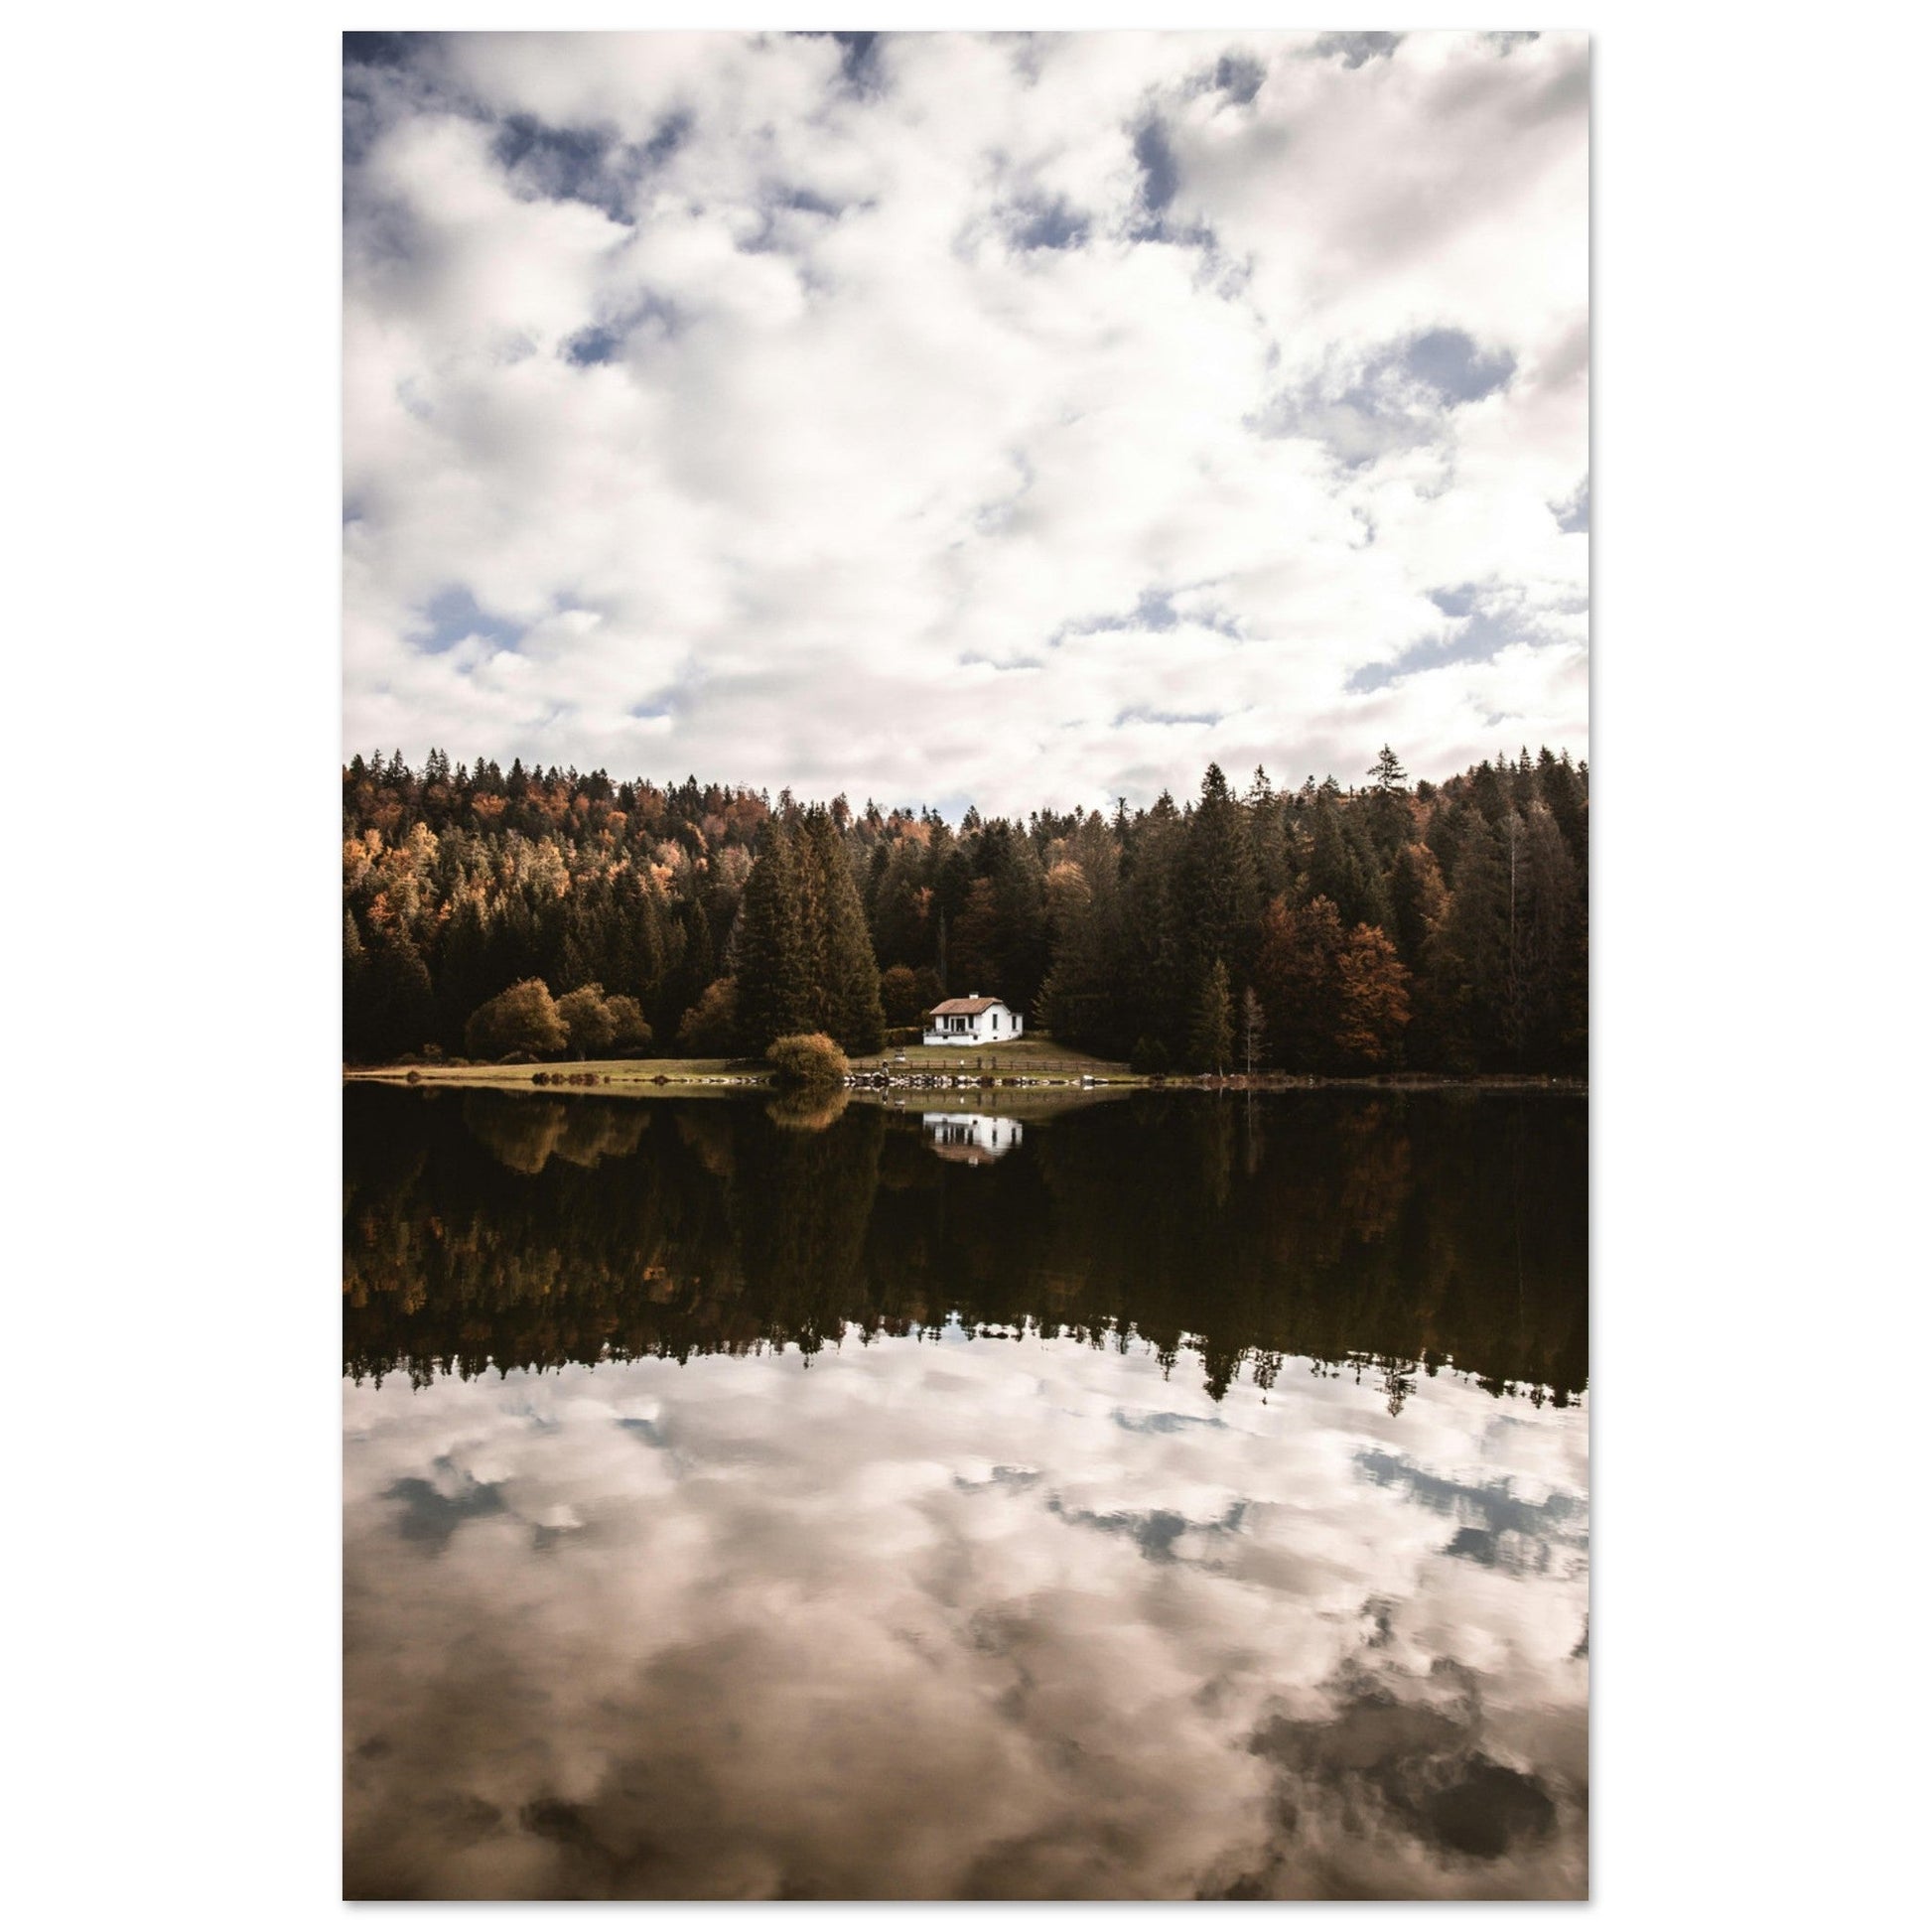 Vente Photo du lac Genin en automne, Jura #2 - Tableau photo alu montagne